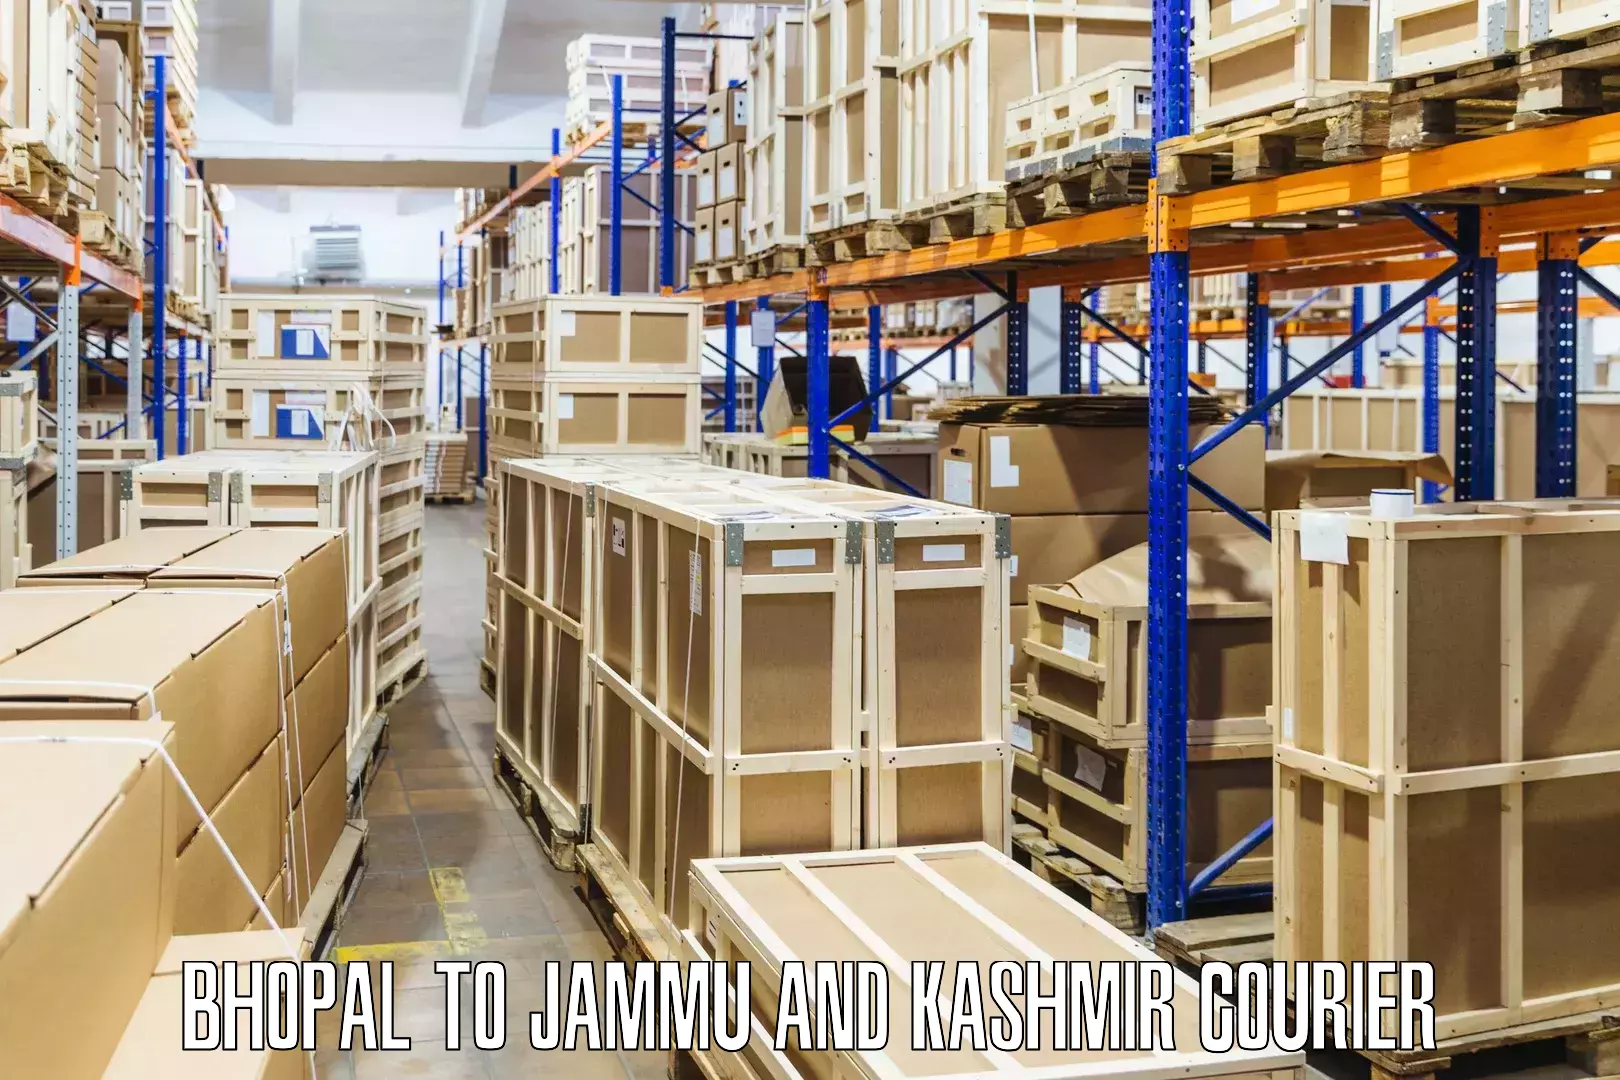 Online shipping calculator in Bhopal to Srinagar Kashmir